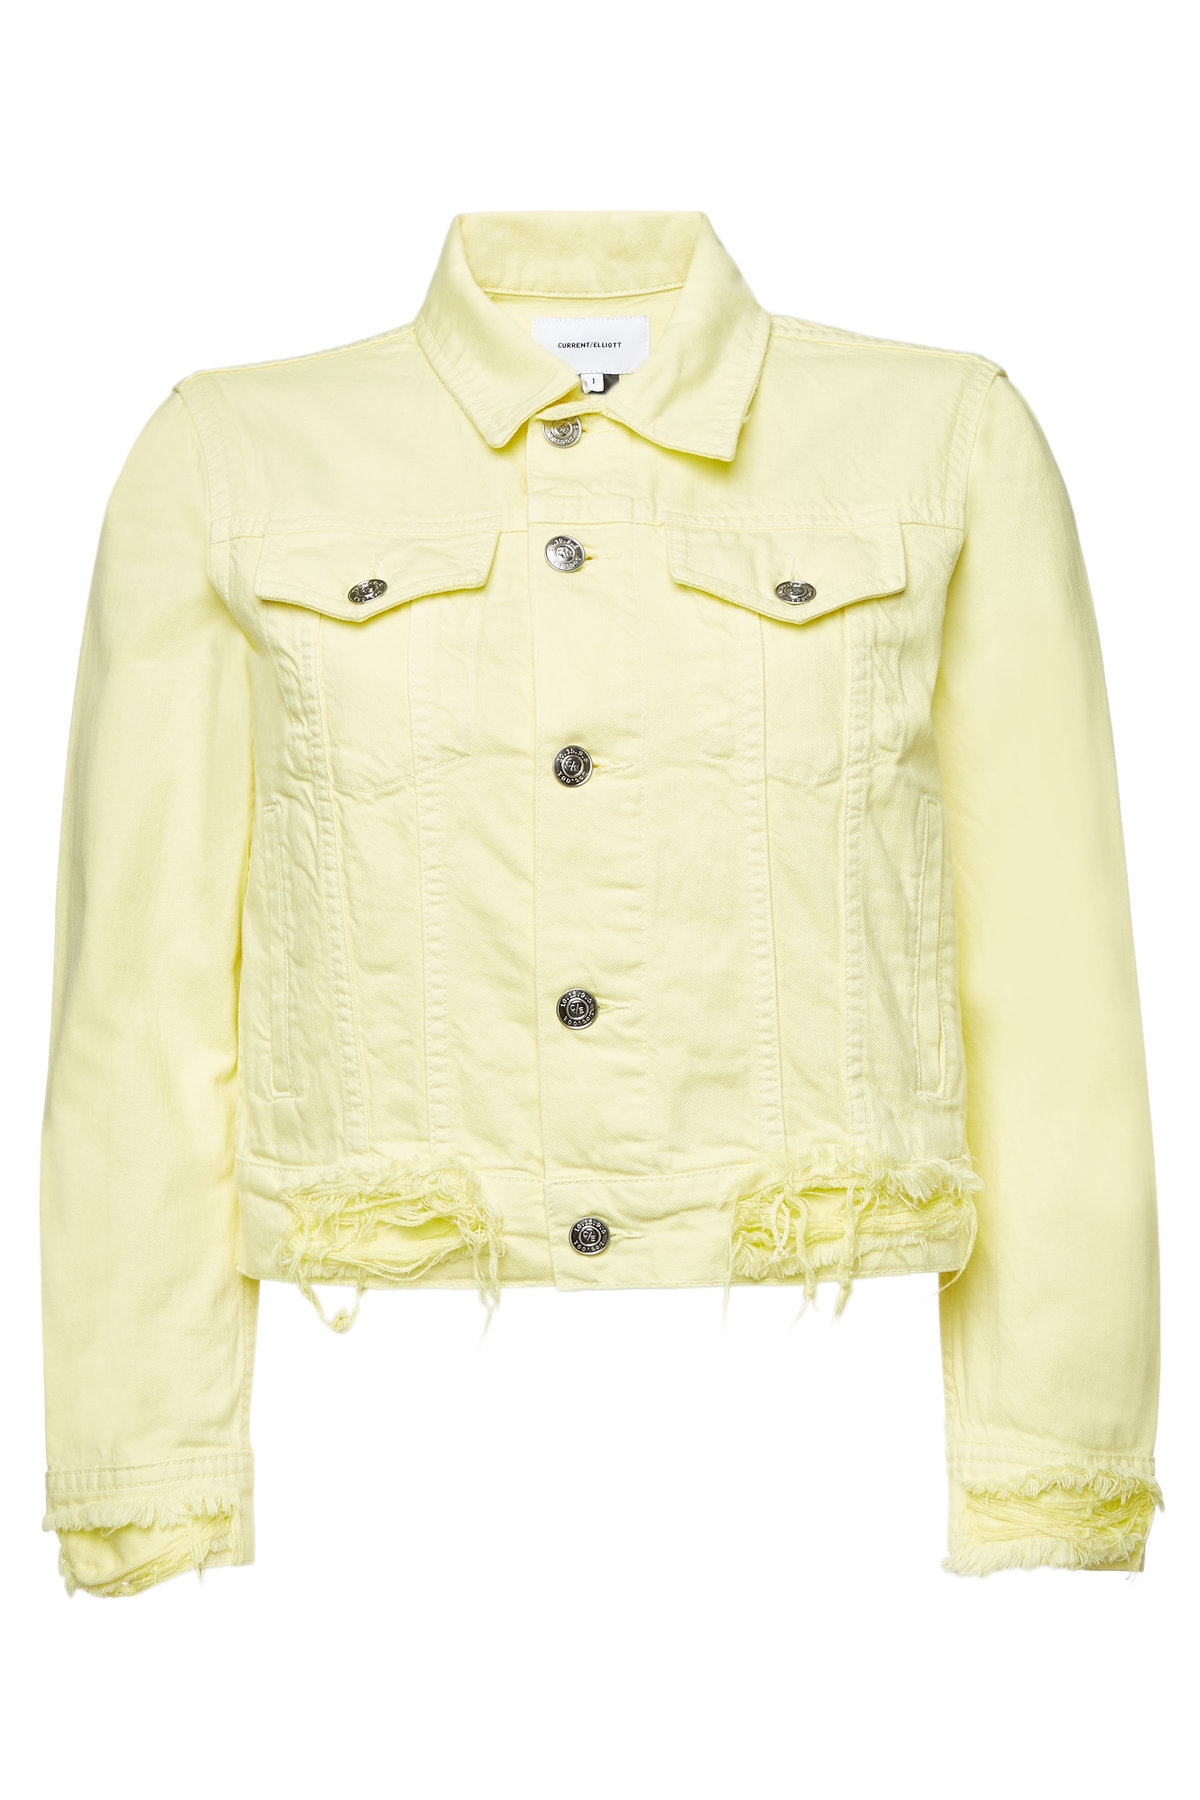 baby yellow denim jacket